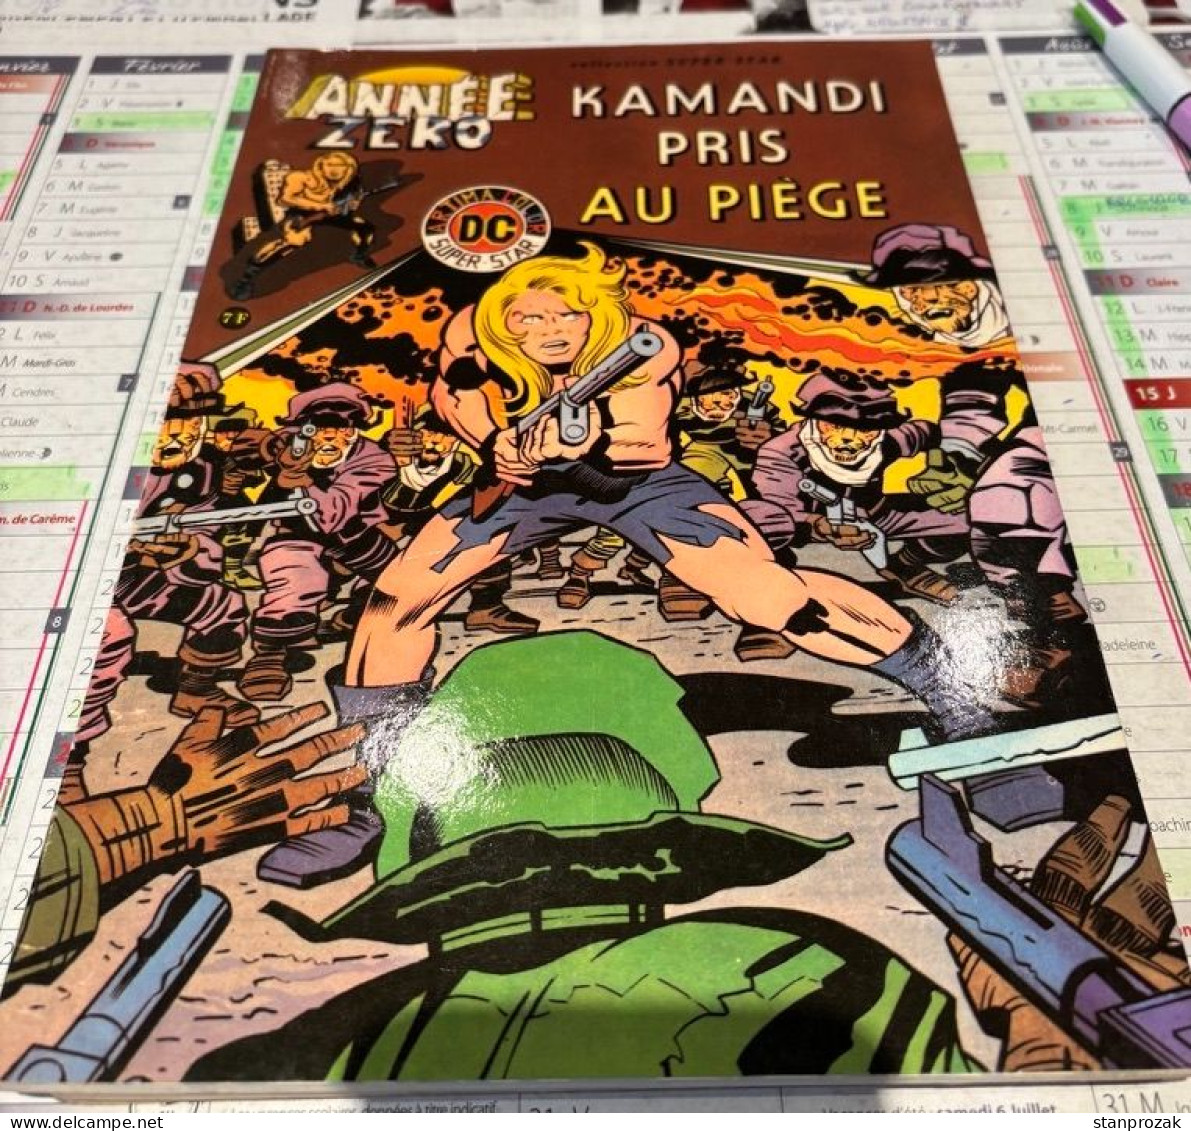 Kamandi Pris Au Piège - Original Edition - French